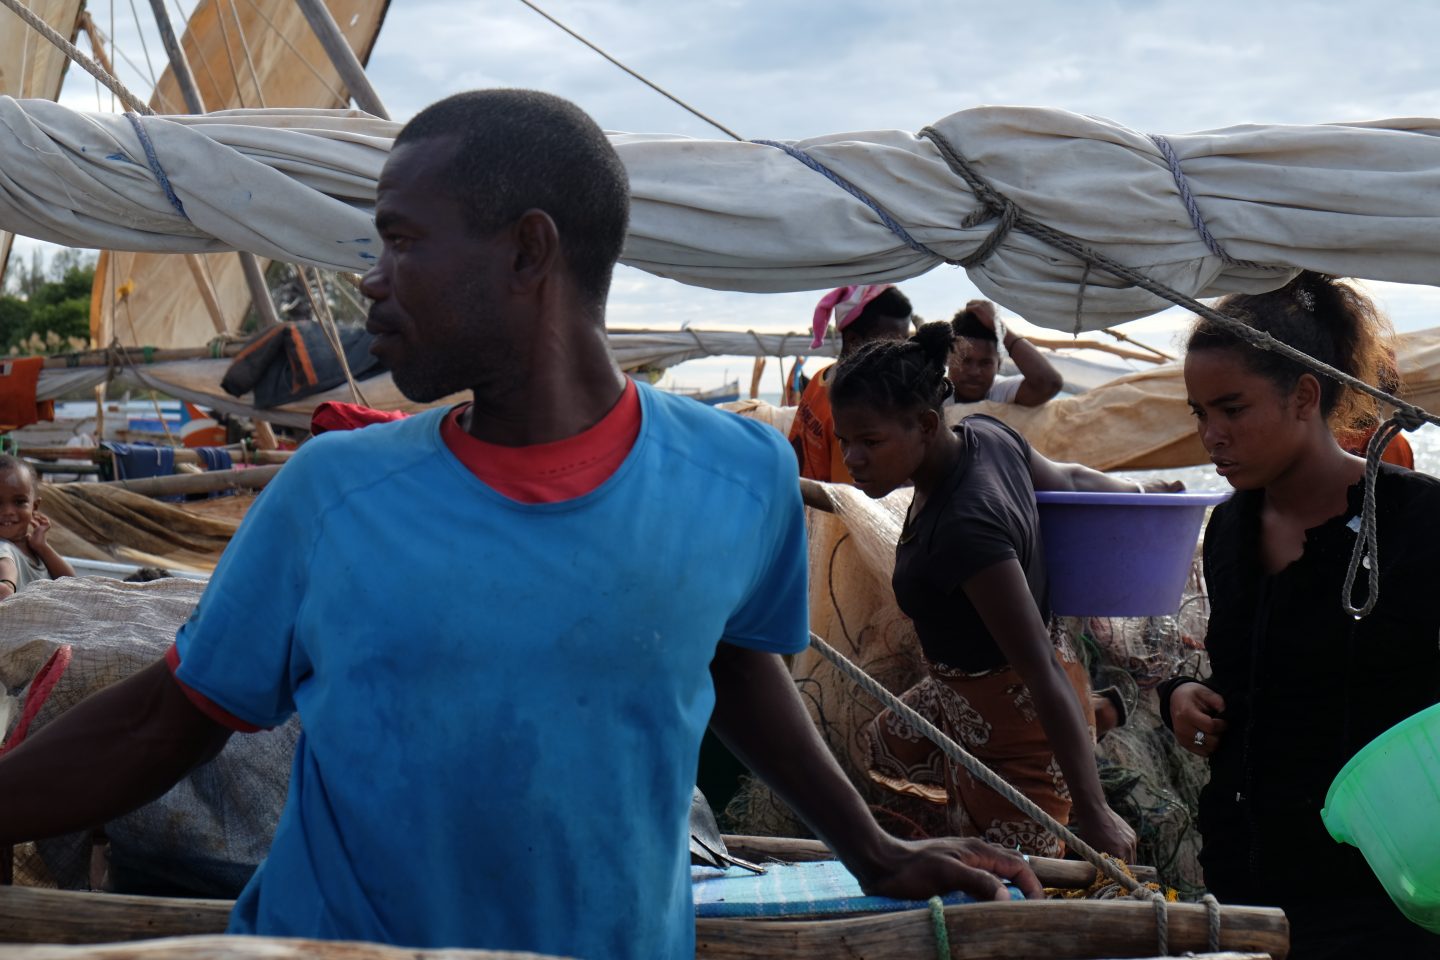 The Madagascar fishermen’s families had been awaiting their return